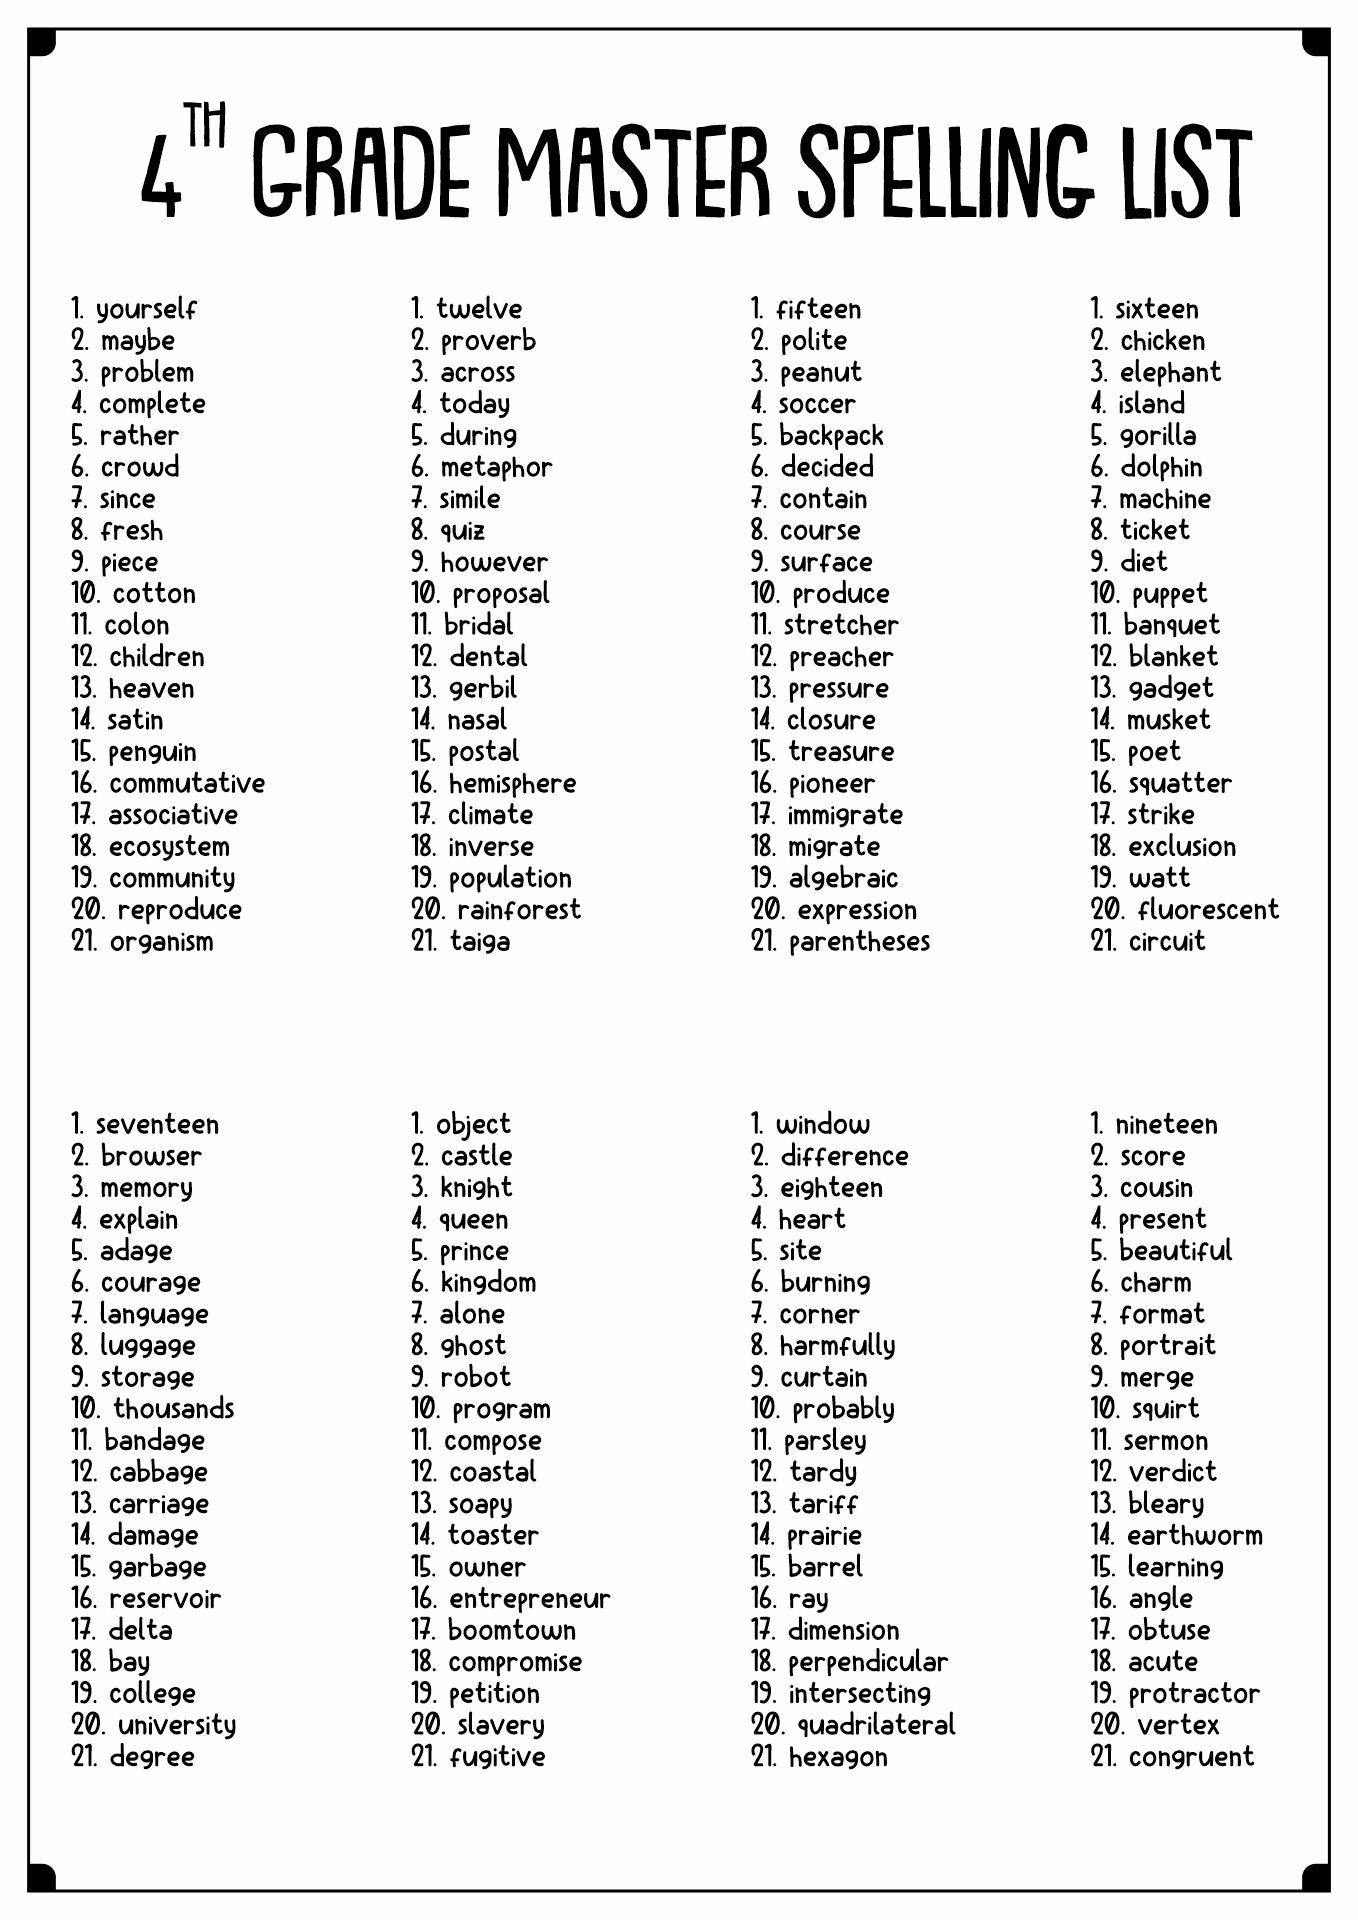 4th Grade Spelling List Image